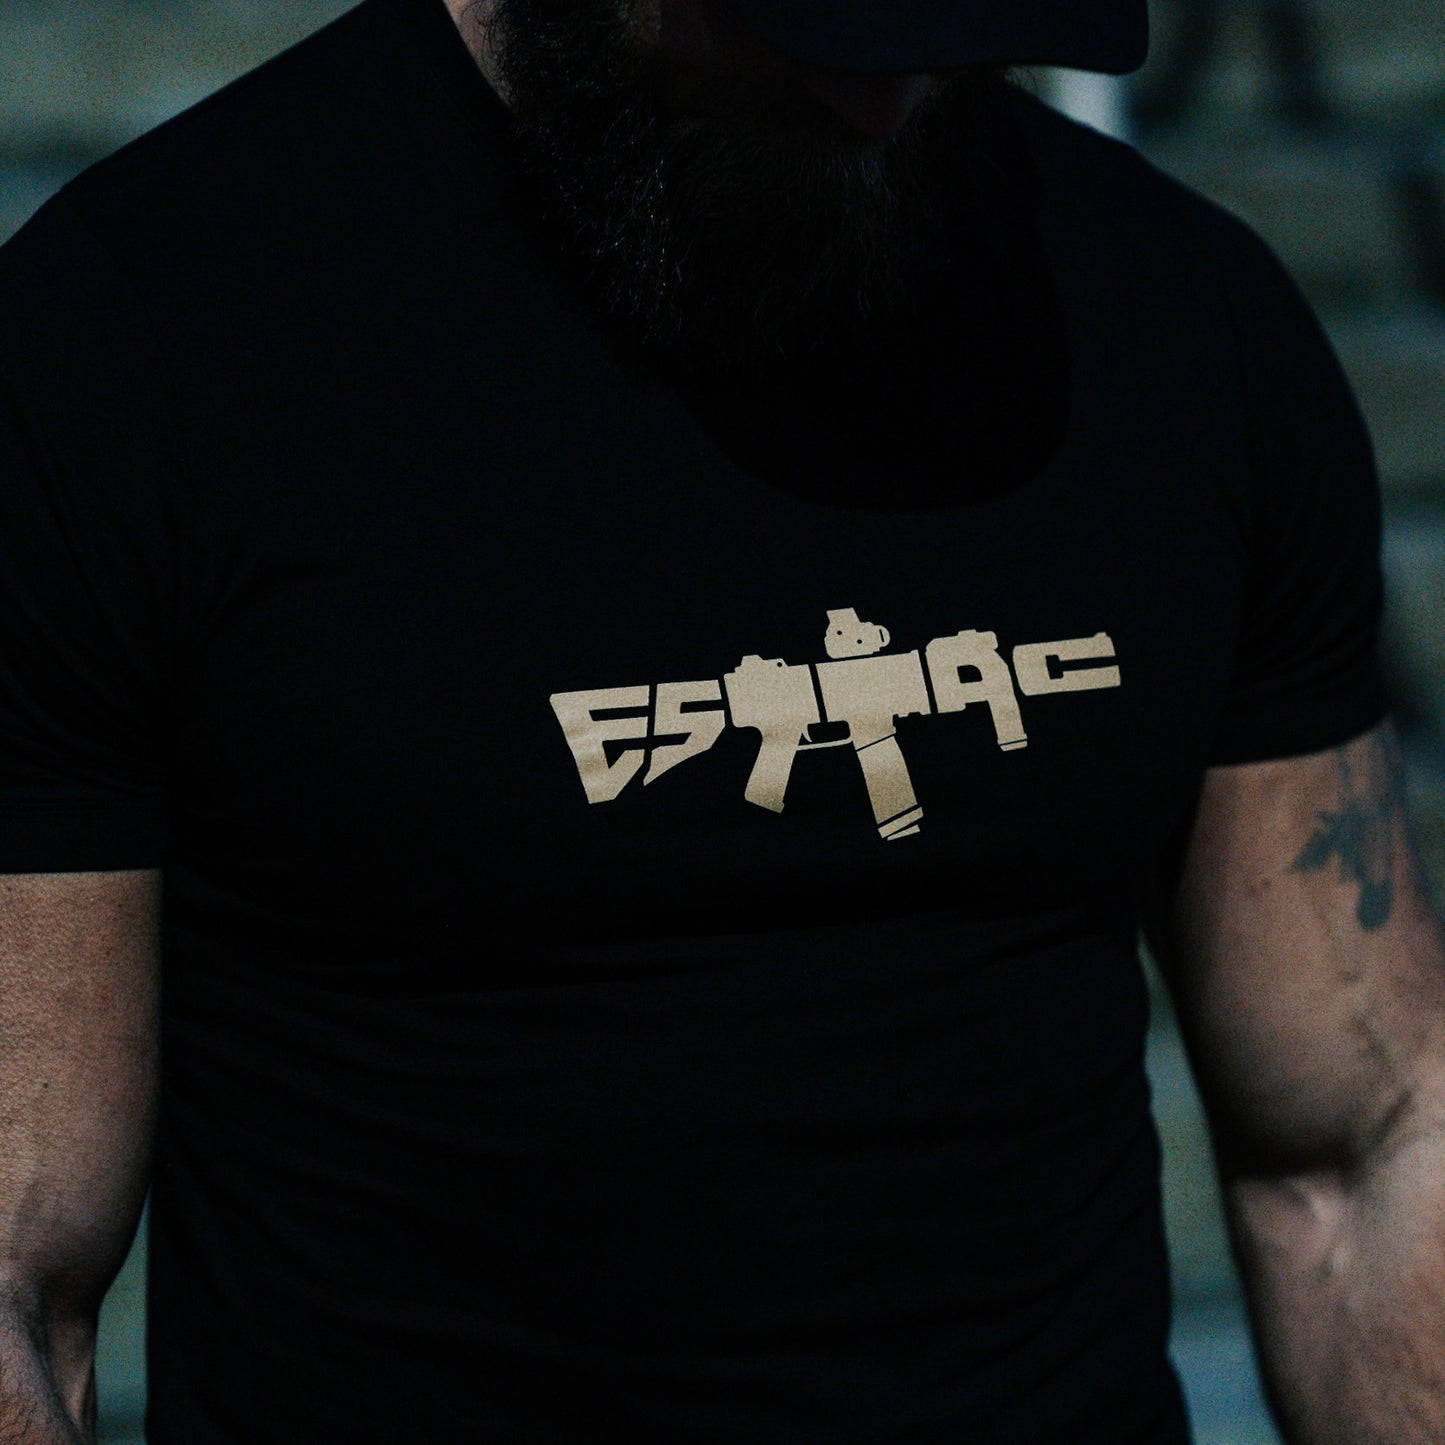 ESTTAC Rifle T-shirt